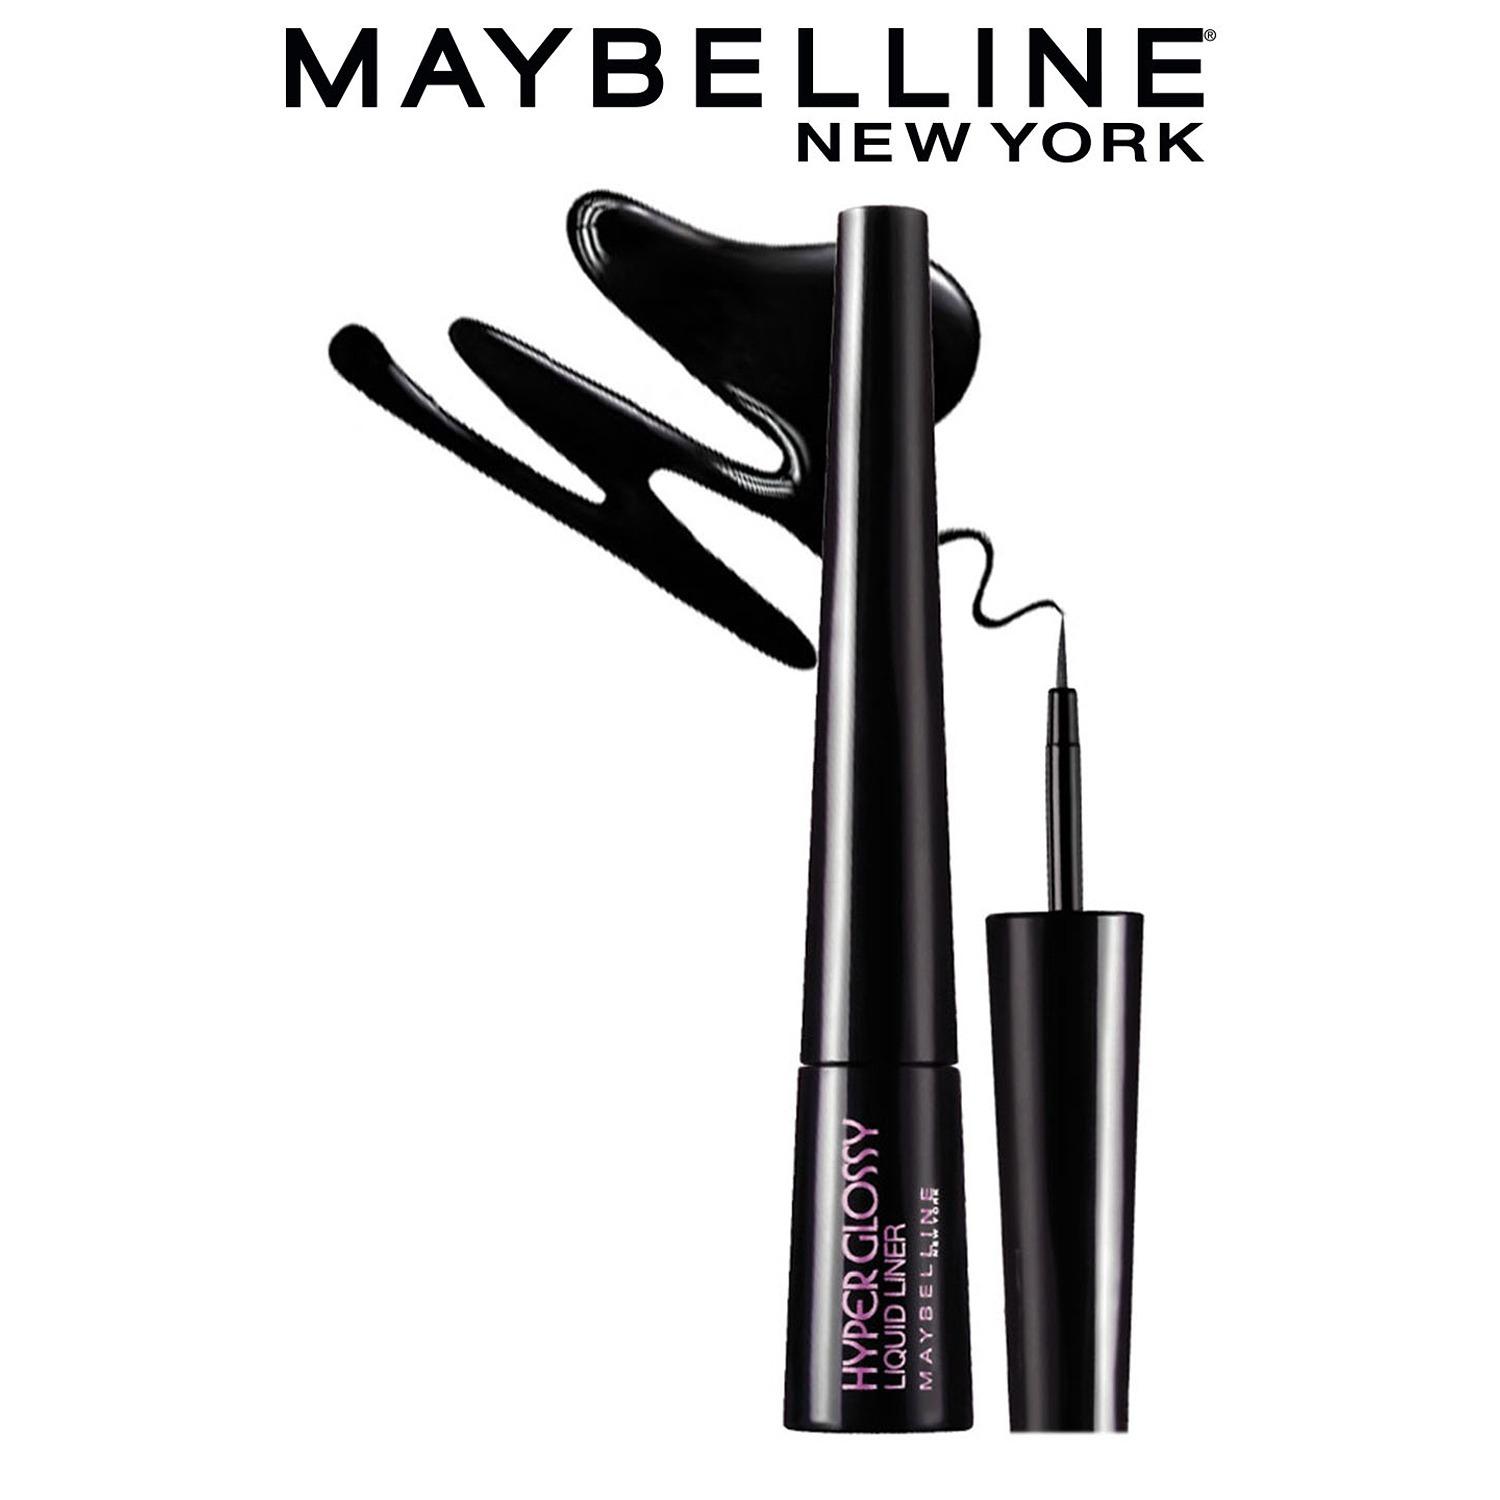 maybelline new york hyper glossy liquid eyeliner - black (3g)